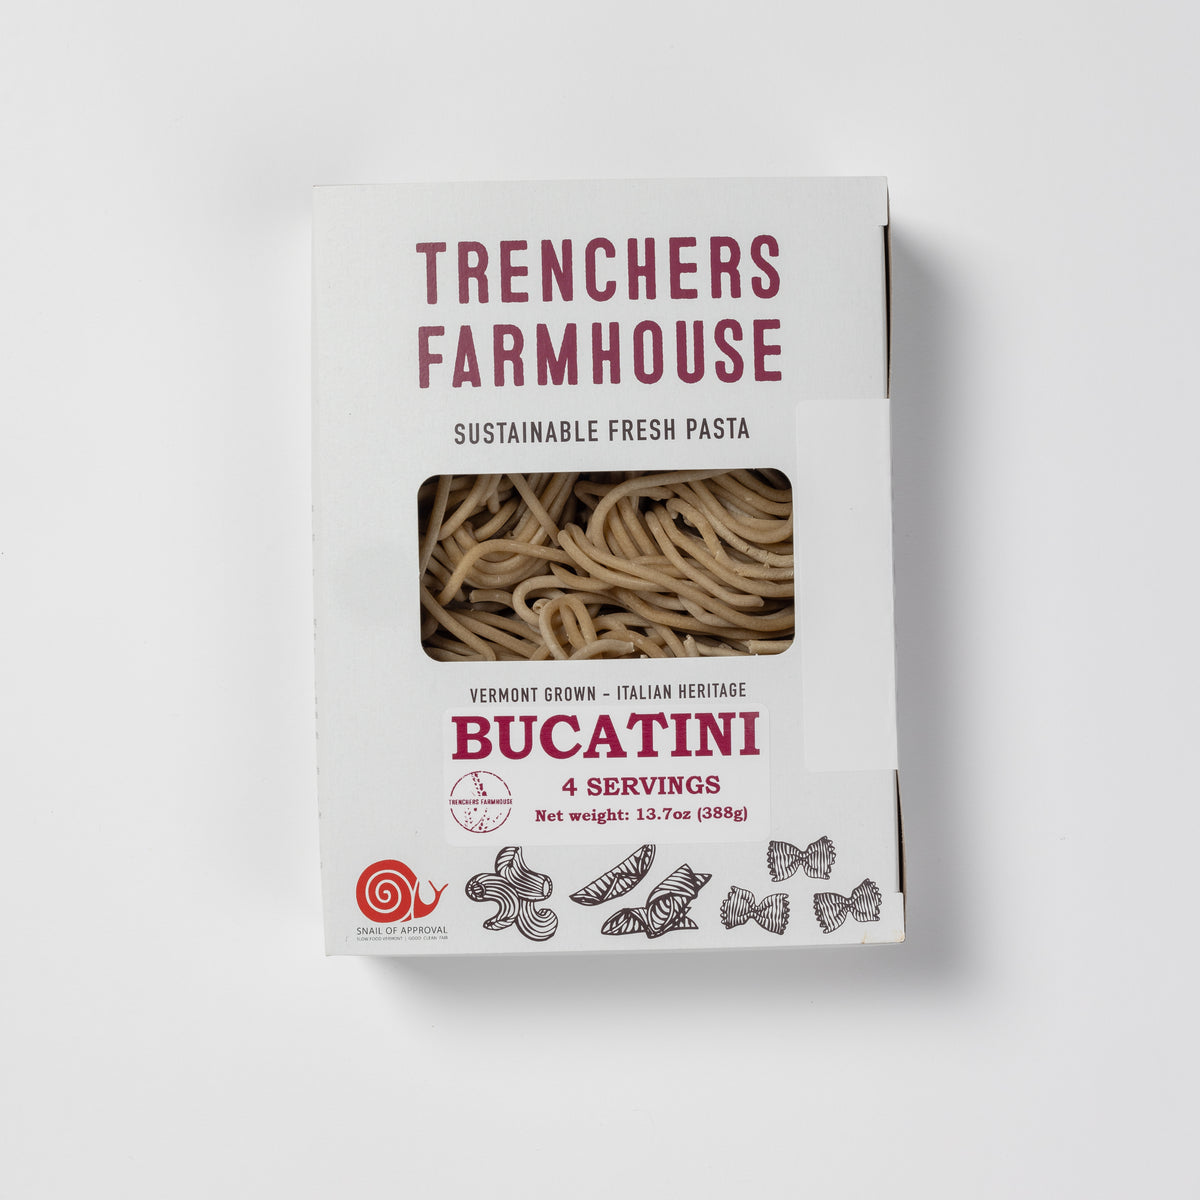 The encyclopaedia of fresh pasta - Democratic Gourmet